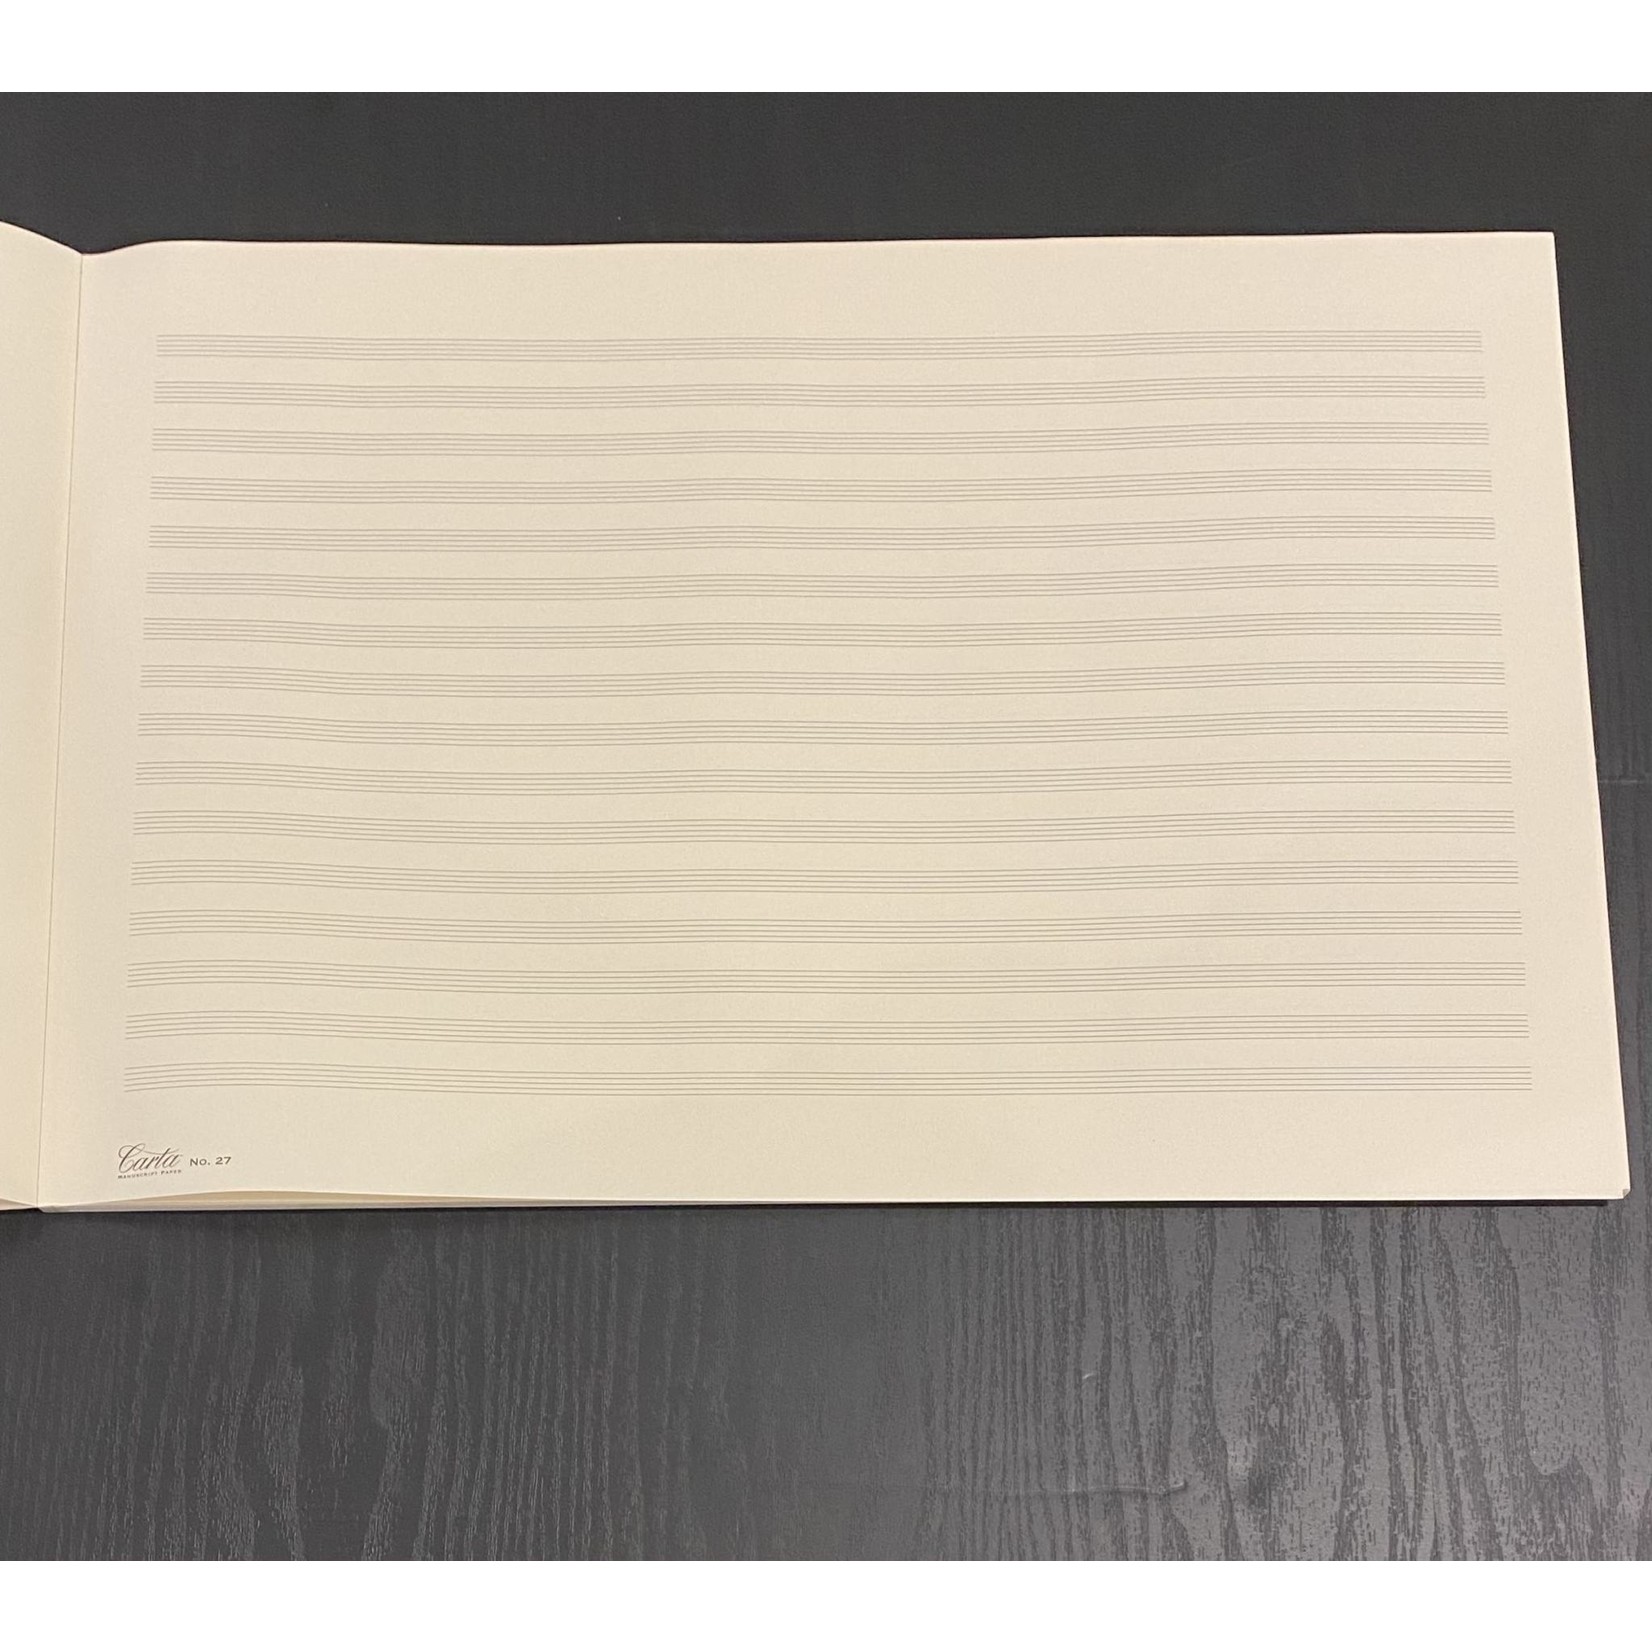 Manuscript Carta Orchestral Pad: No. 27, 16 staves/40 sheets landscape orientation (18" x 12")